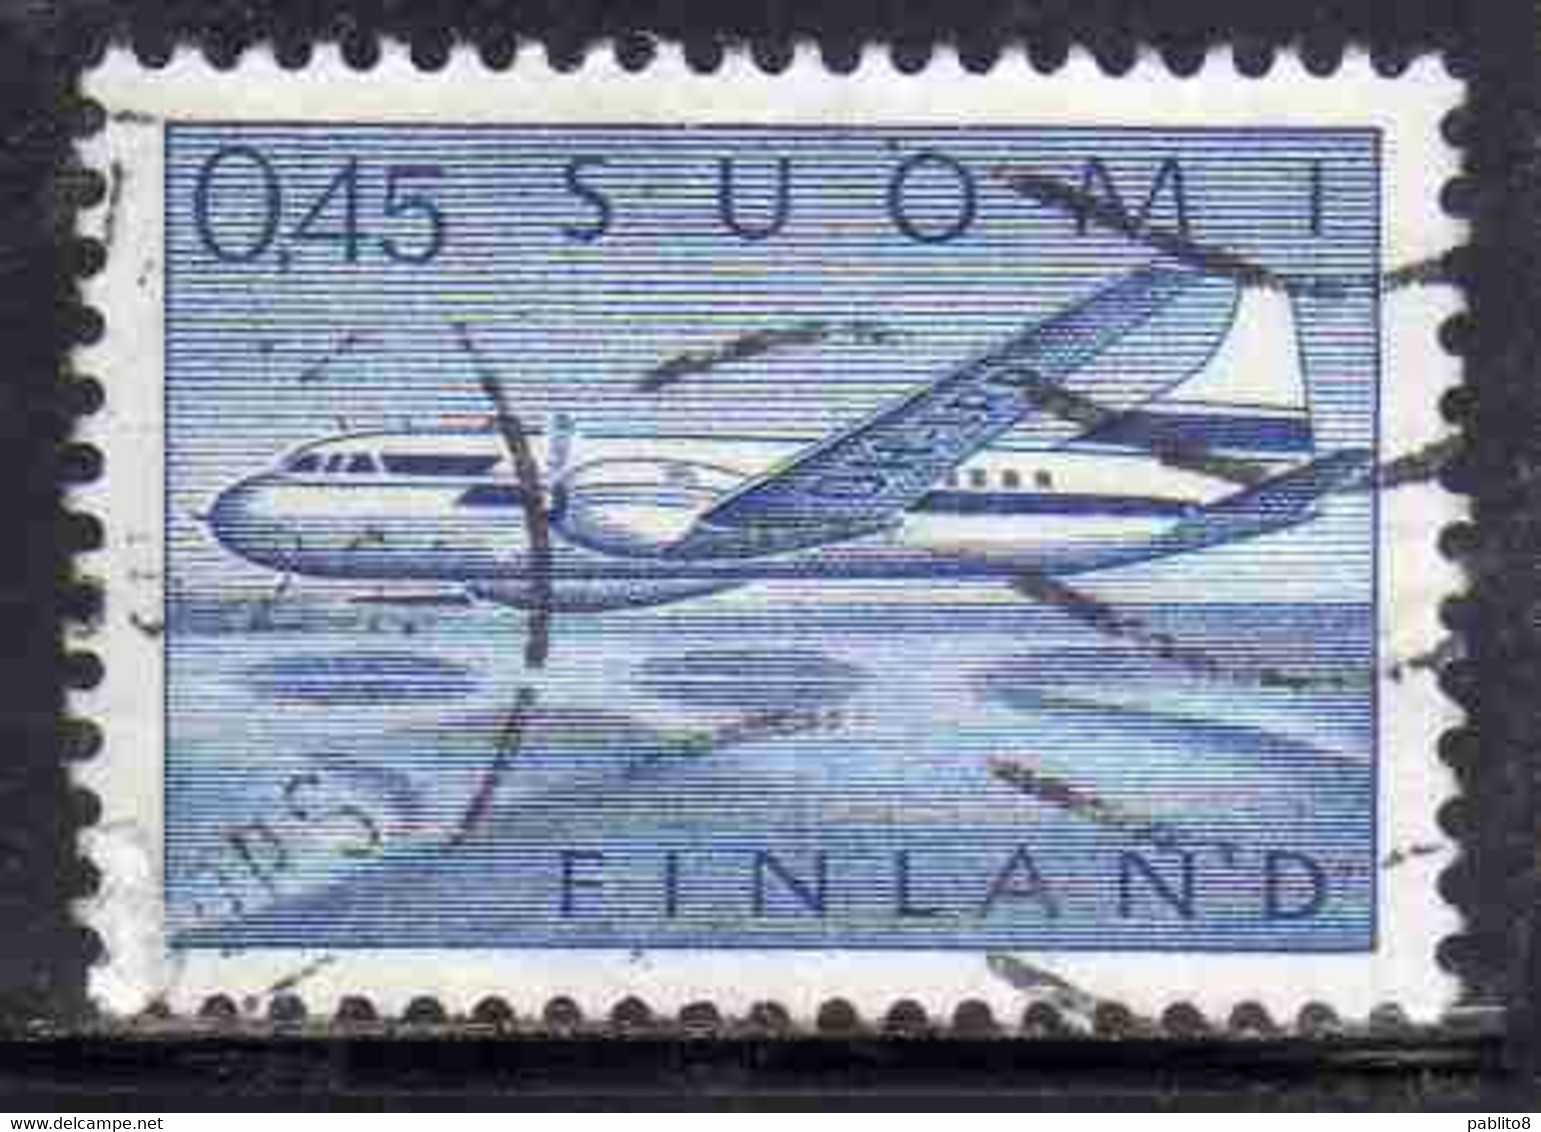 SUOMI FINLAND FINLANDIA FINLANDE 1963 AIR POST MAIL AIRMAIL CONVAIR OVER LAKES 0.45m 45p USED USATO OBLITERE' - Gebraucht